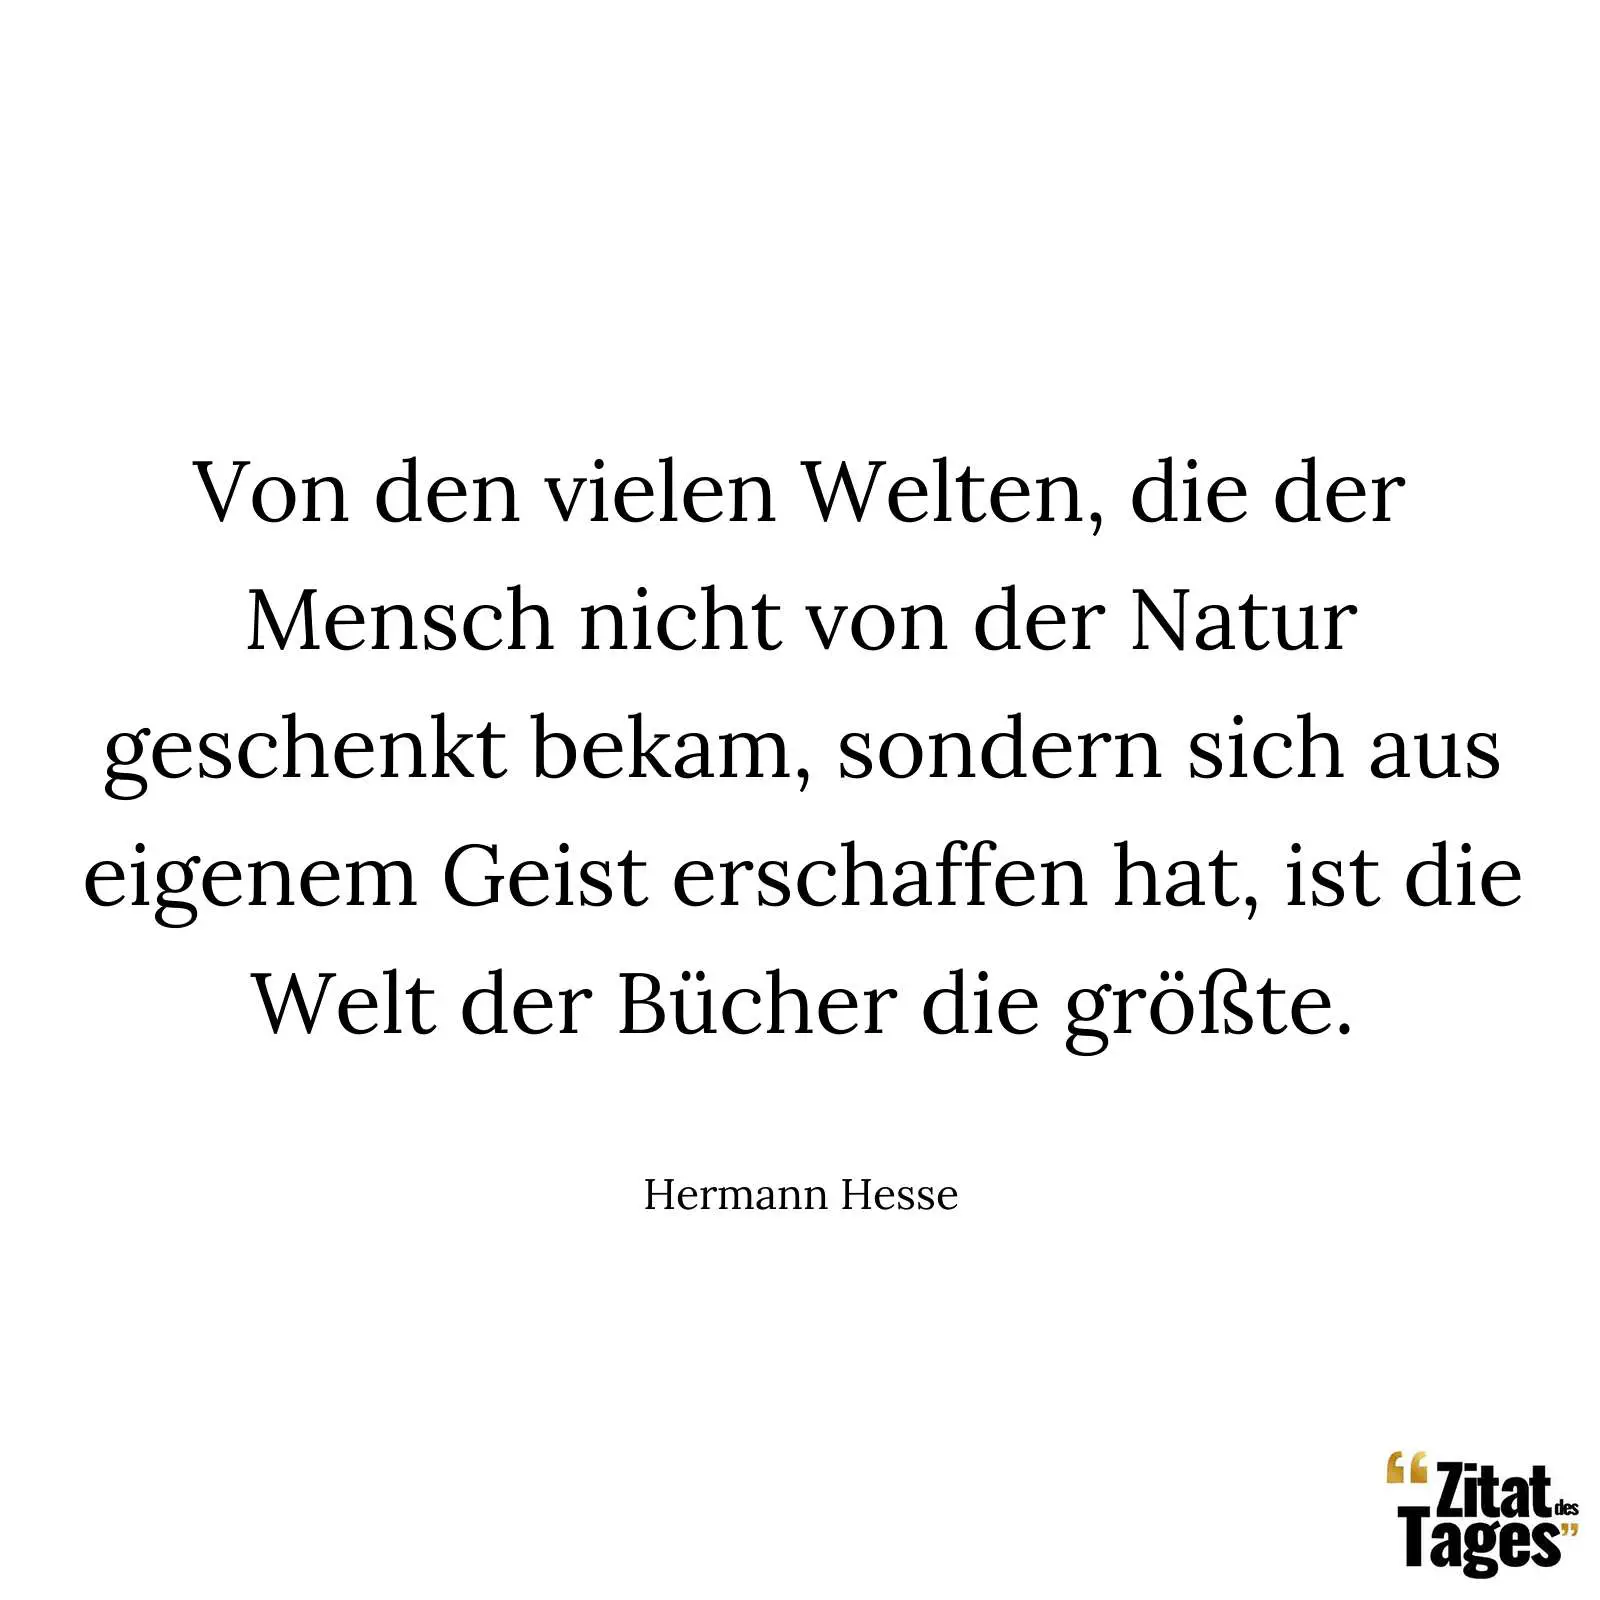 Hermann hesse zitate trauer